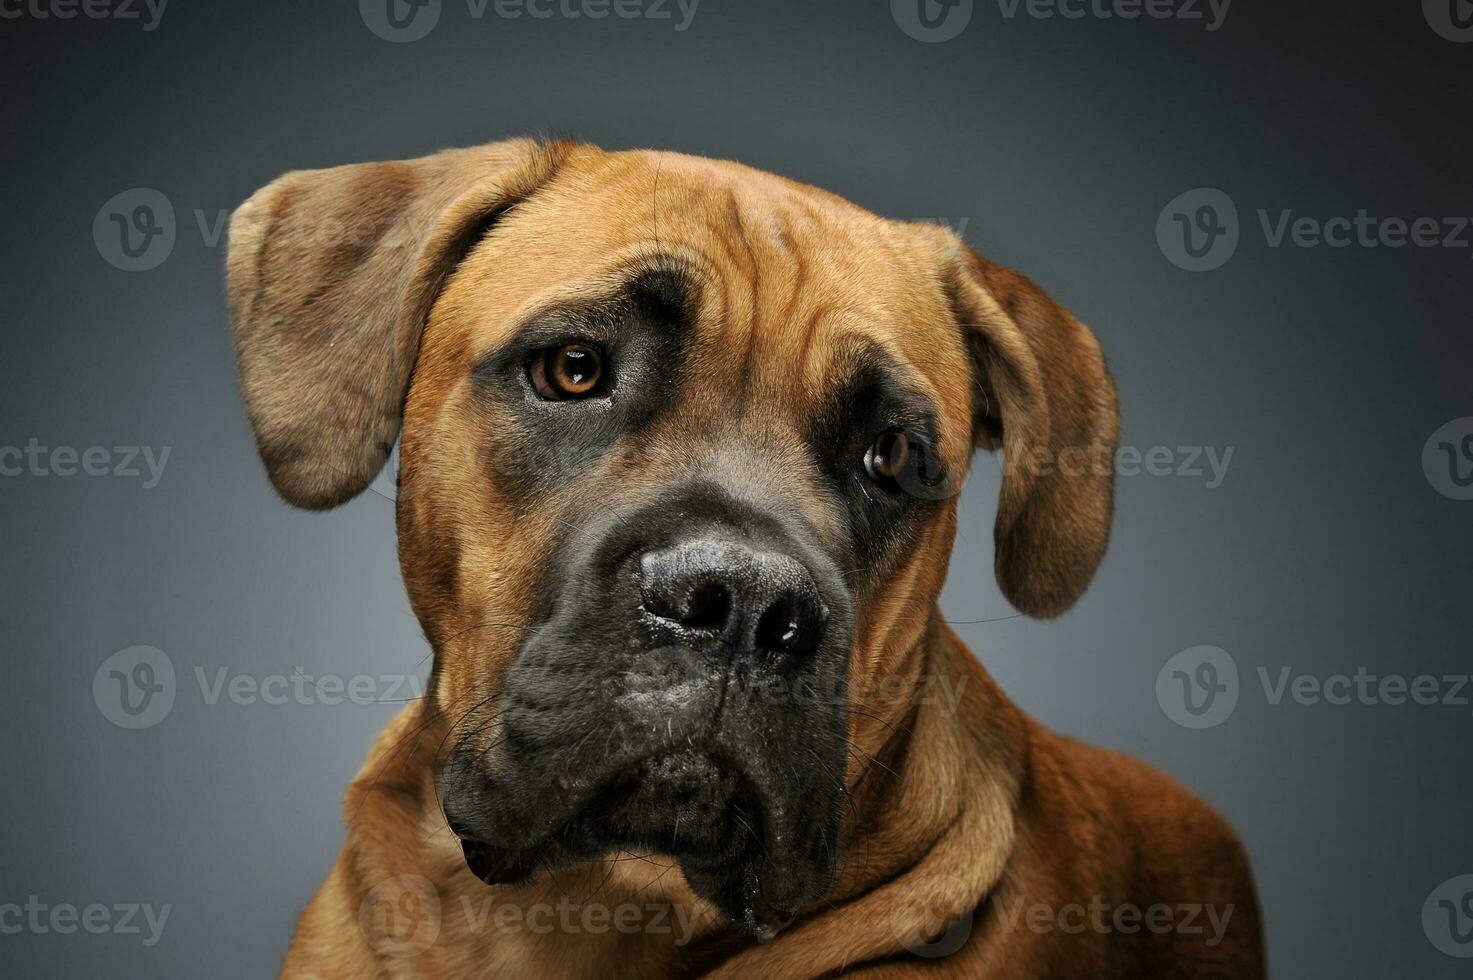 cachorro bengala Corso dentro cinzento fundo foto estúdio